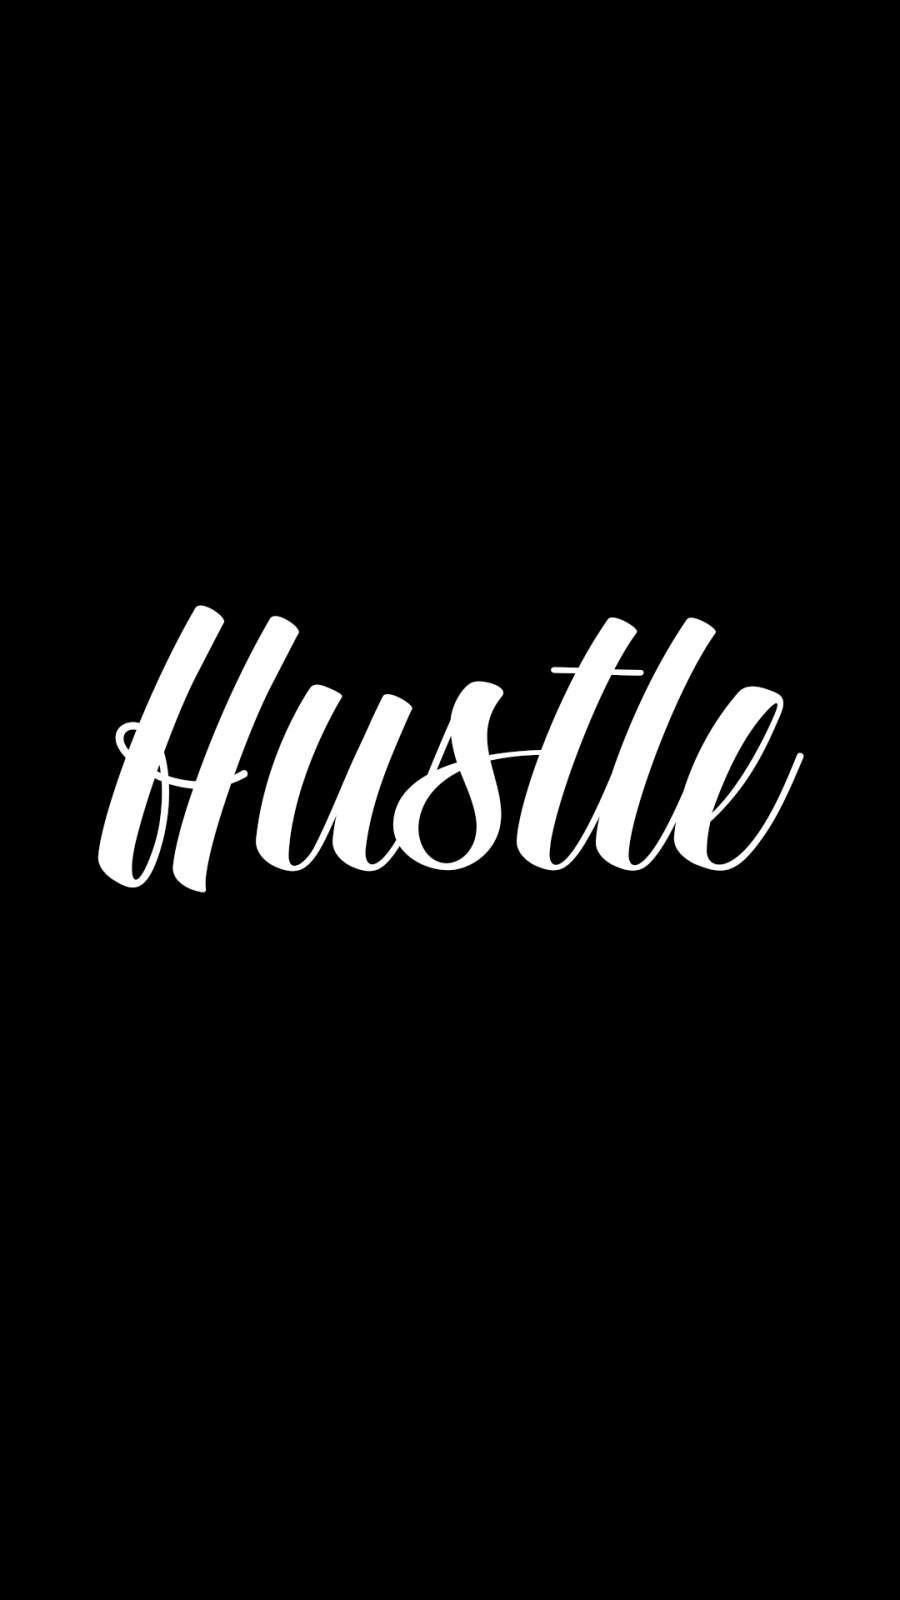 hustle loyalty respect wallpaper